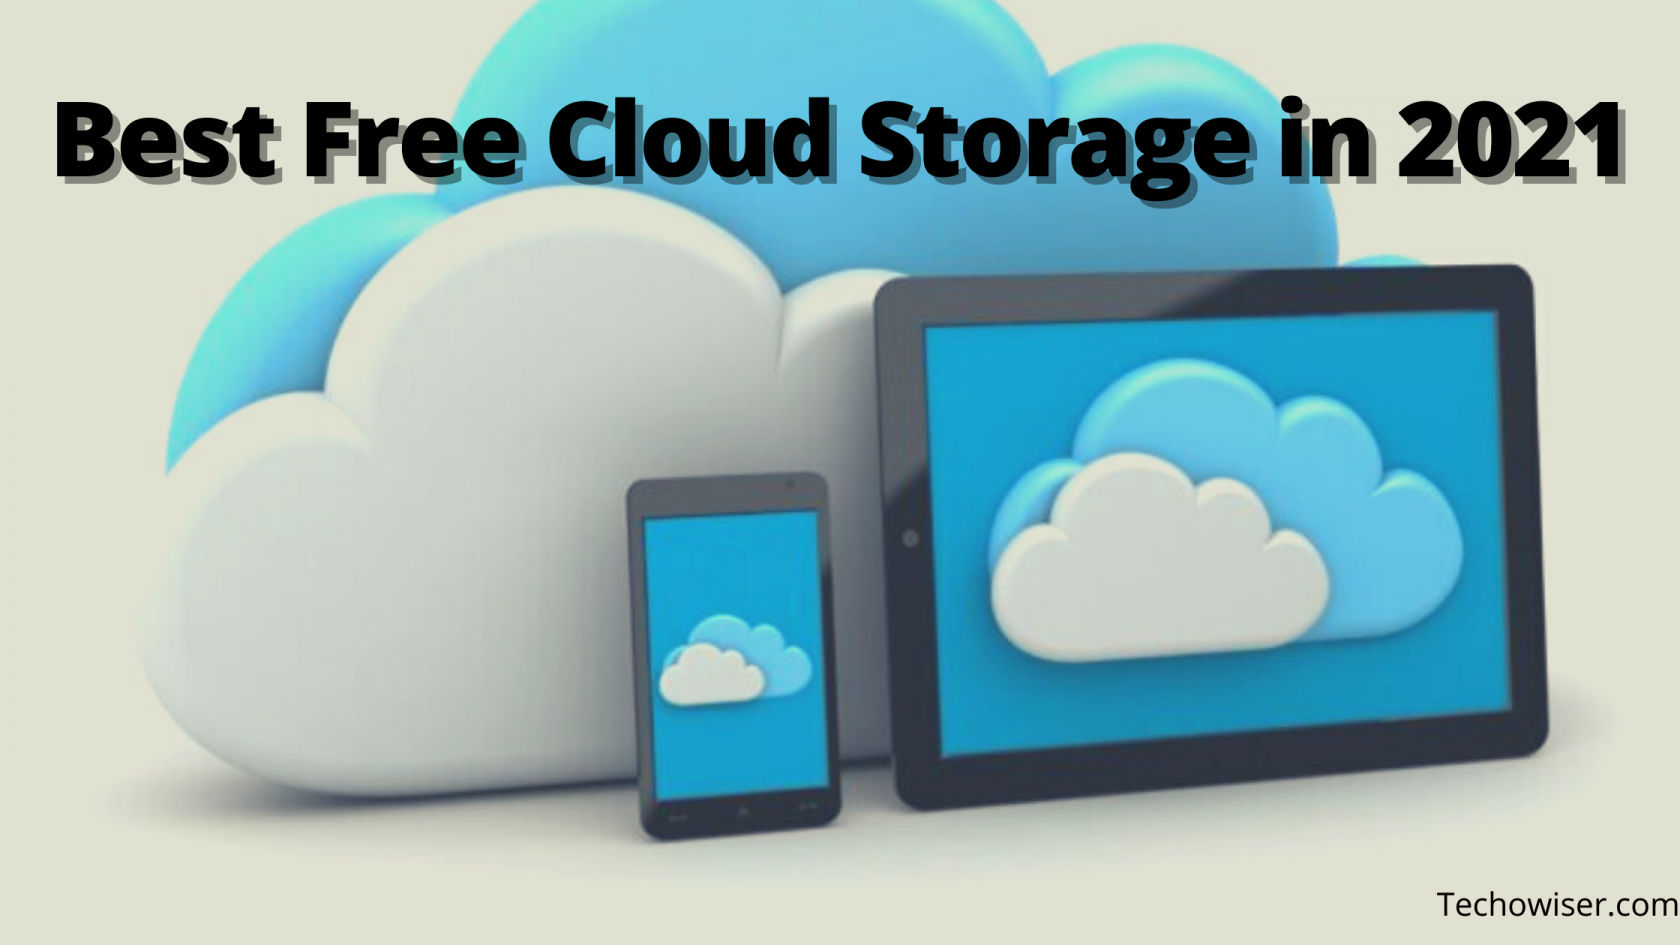 Best Free Cloud Storage in 2021